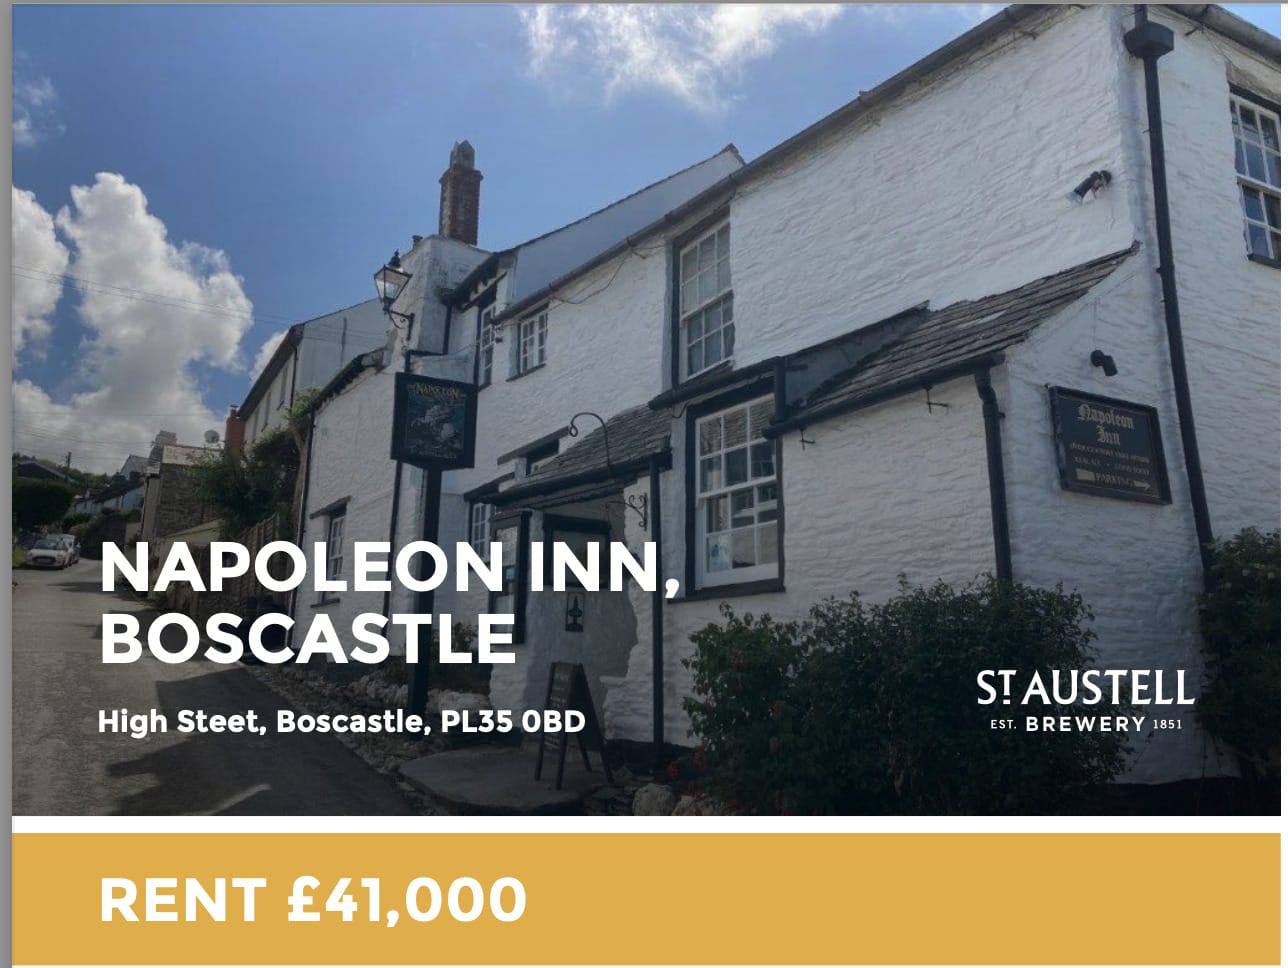 Lease A Pub In Boscastle - Run The Napoleon Inn !